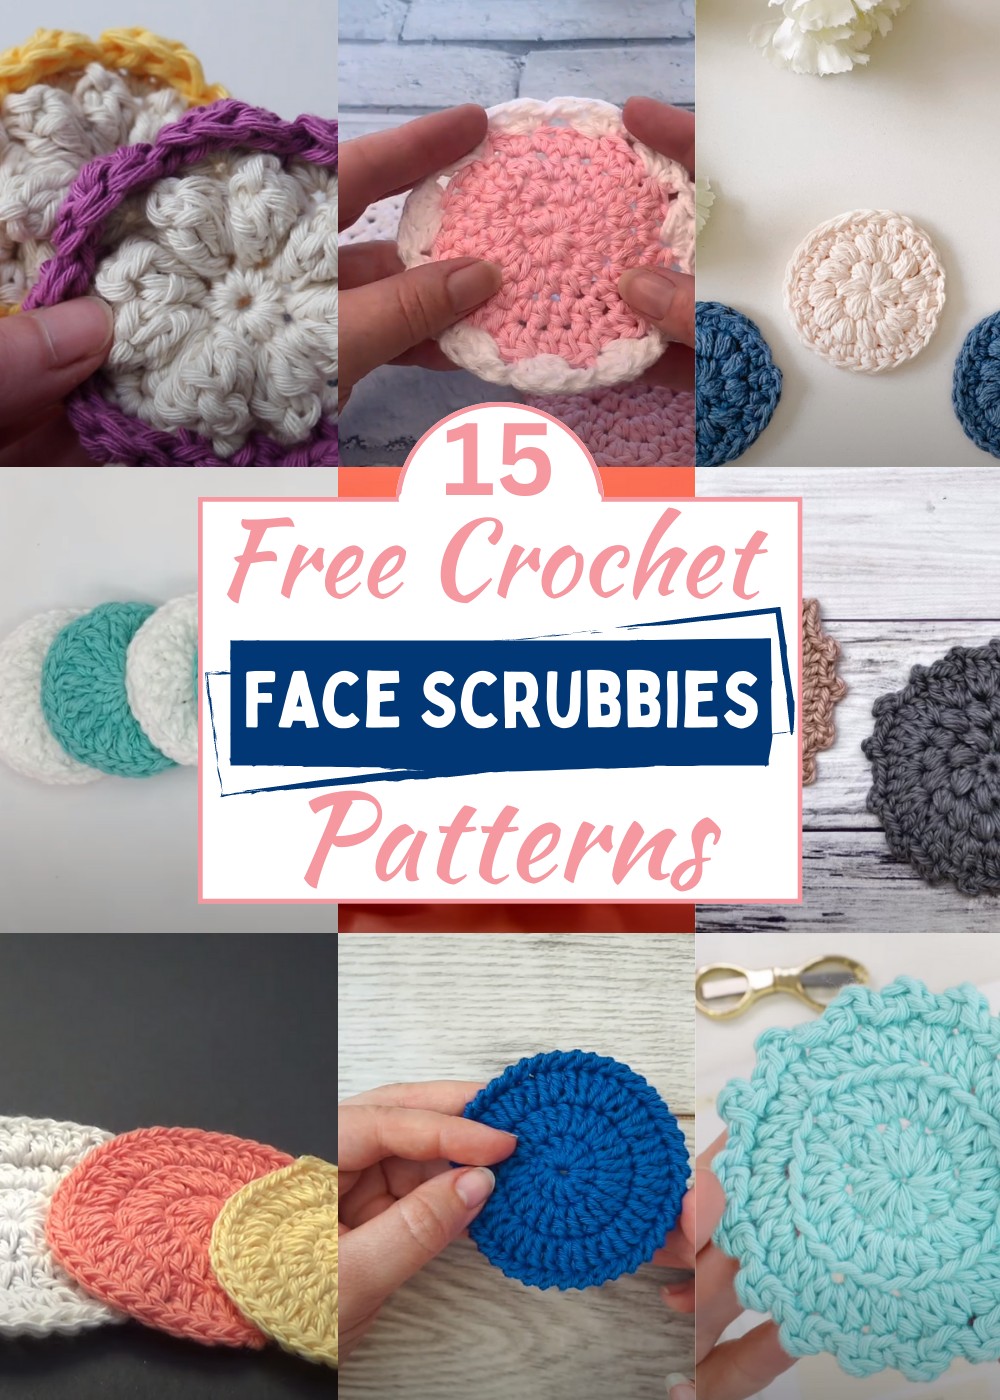 Crochet Face Scrubbies Patterns